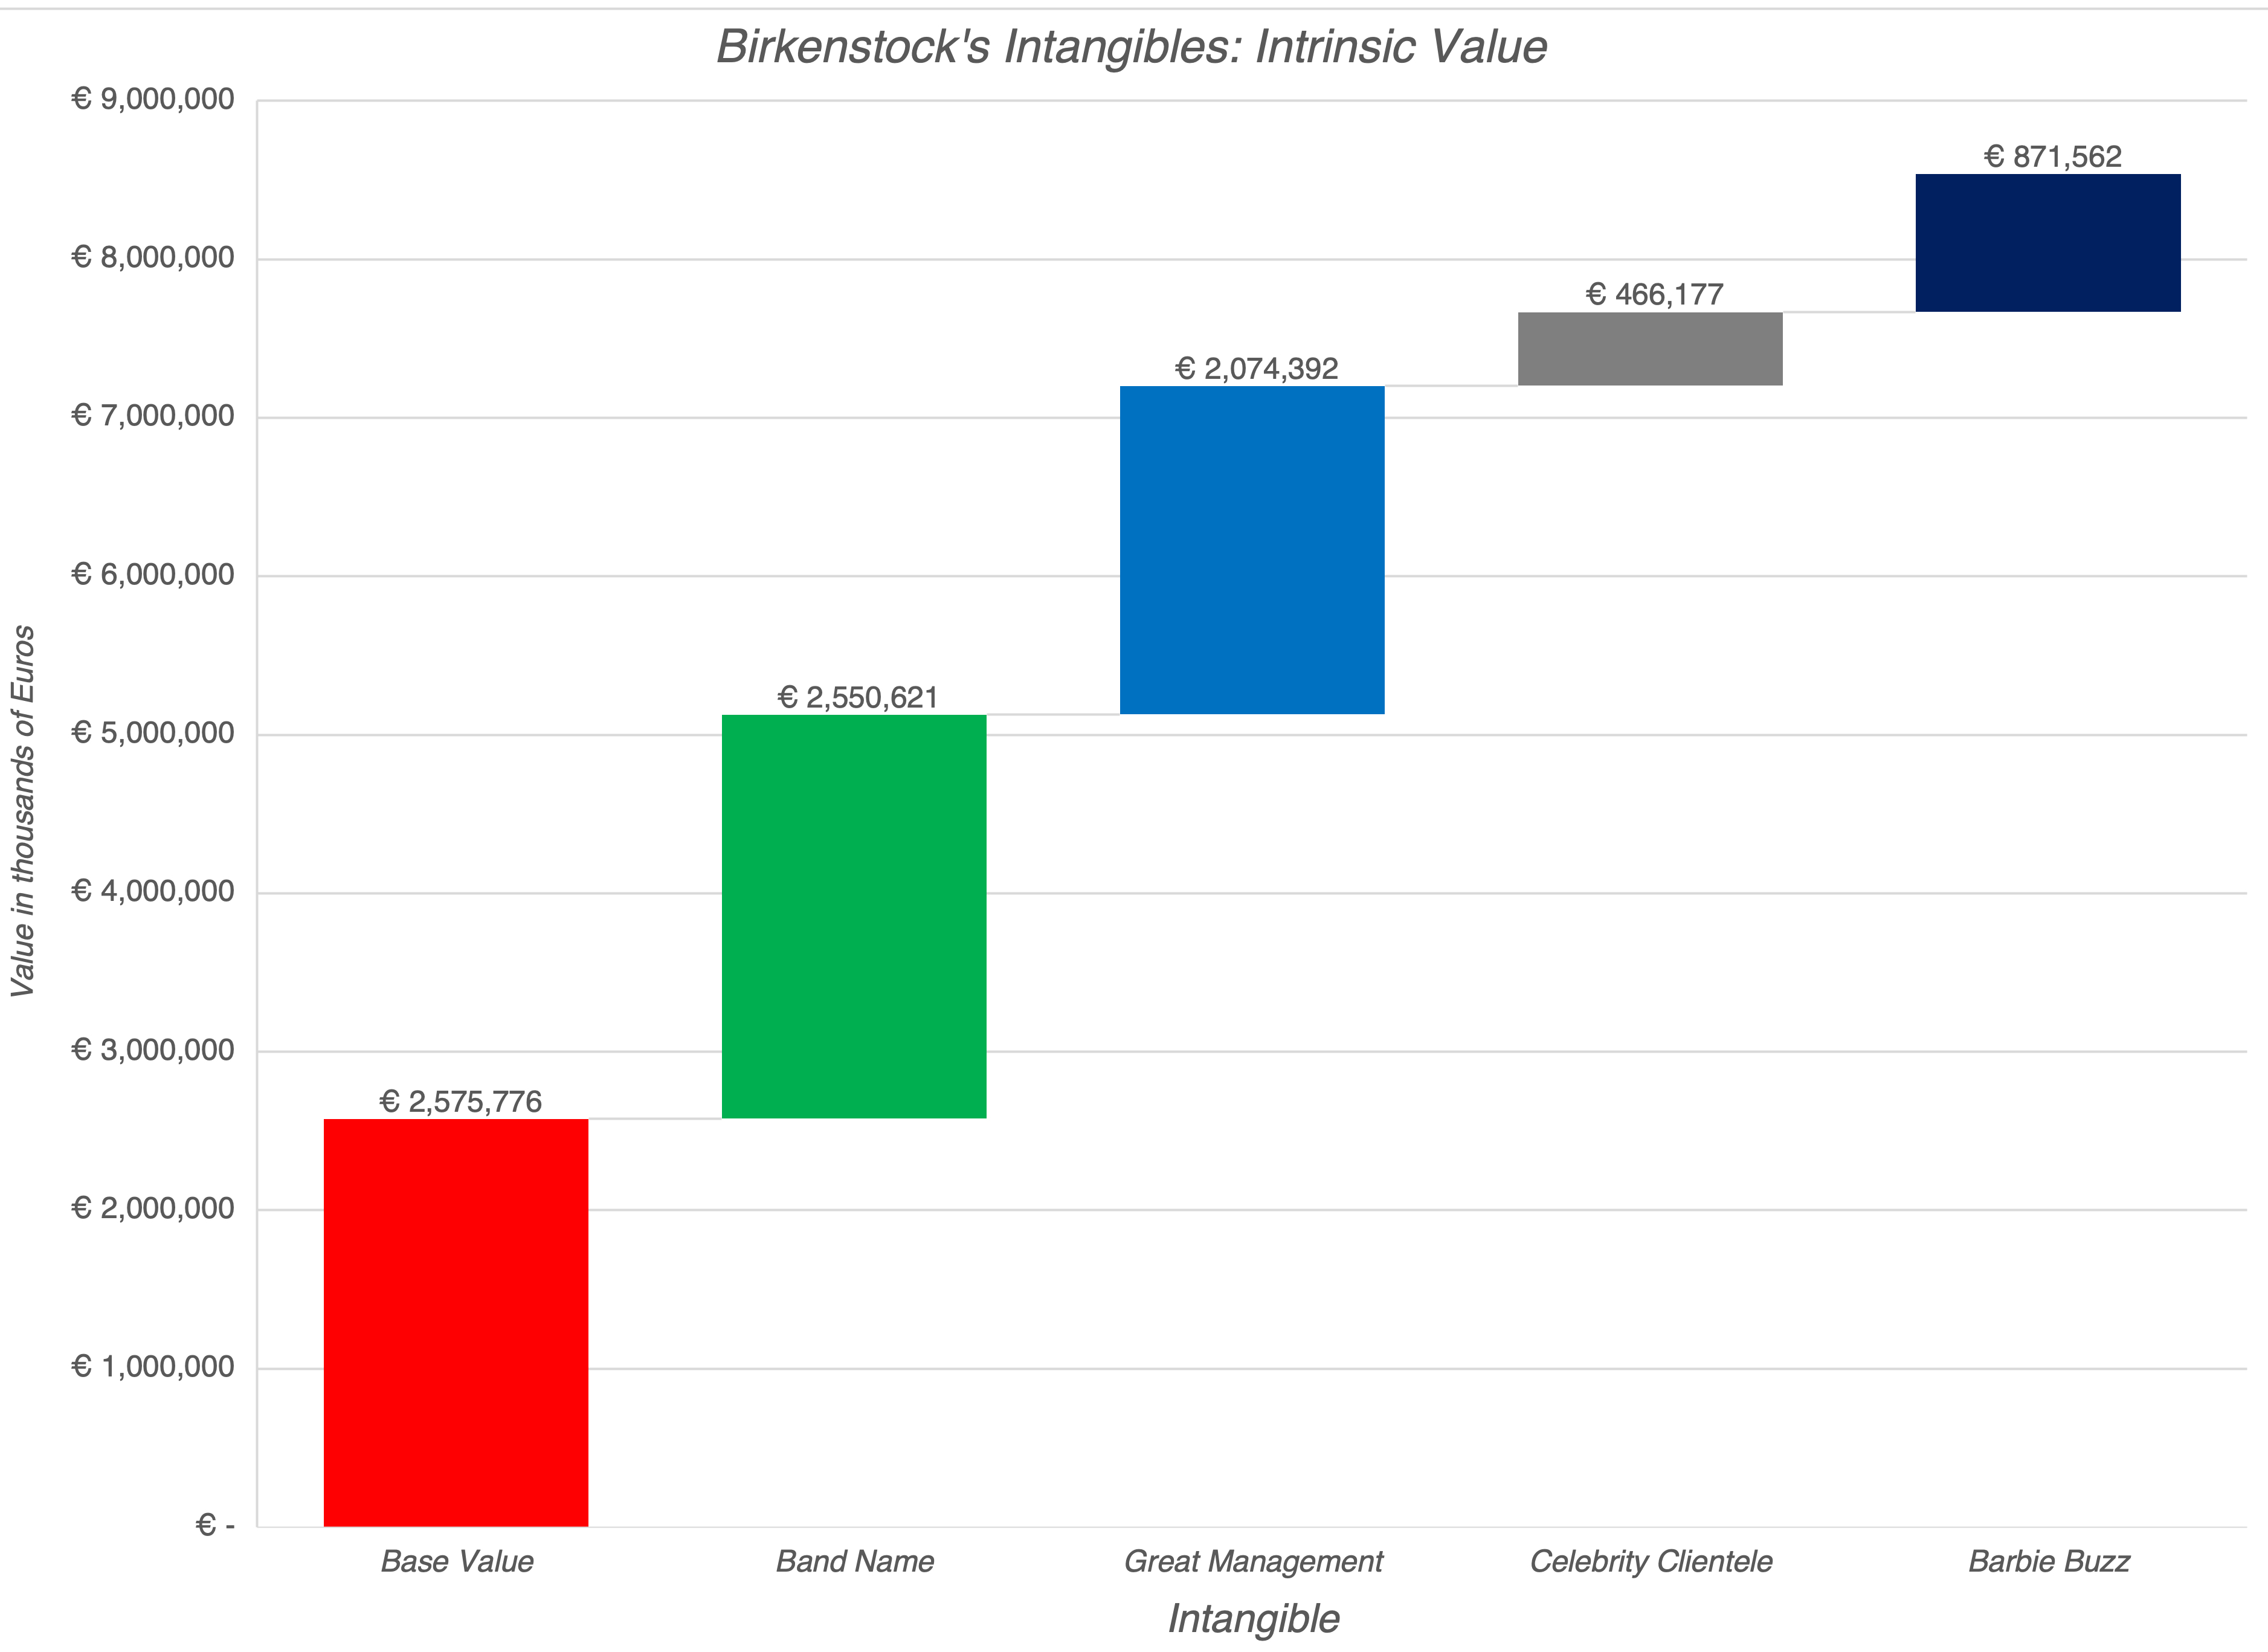 LVMH-backed fund buys majority stake in Birkenstock